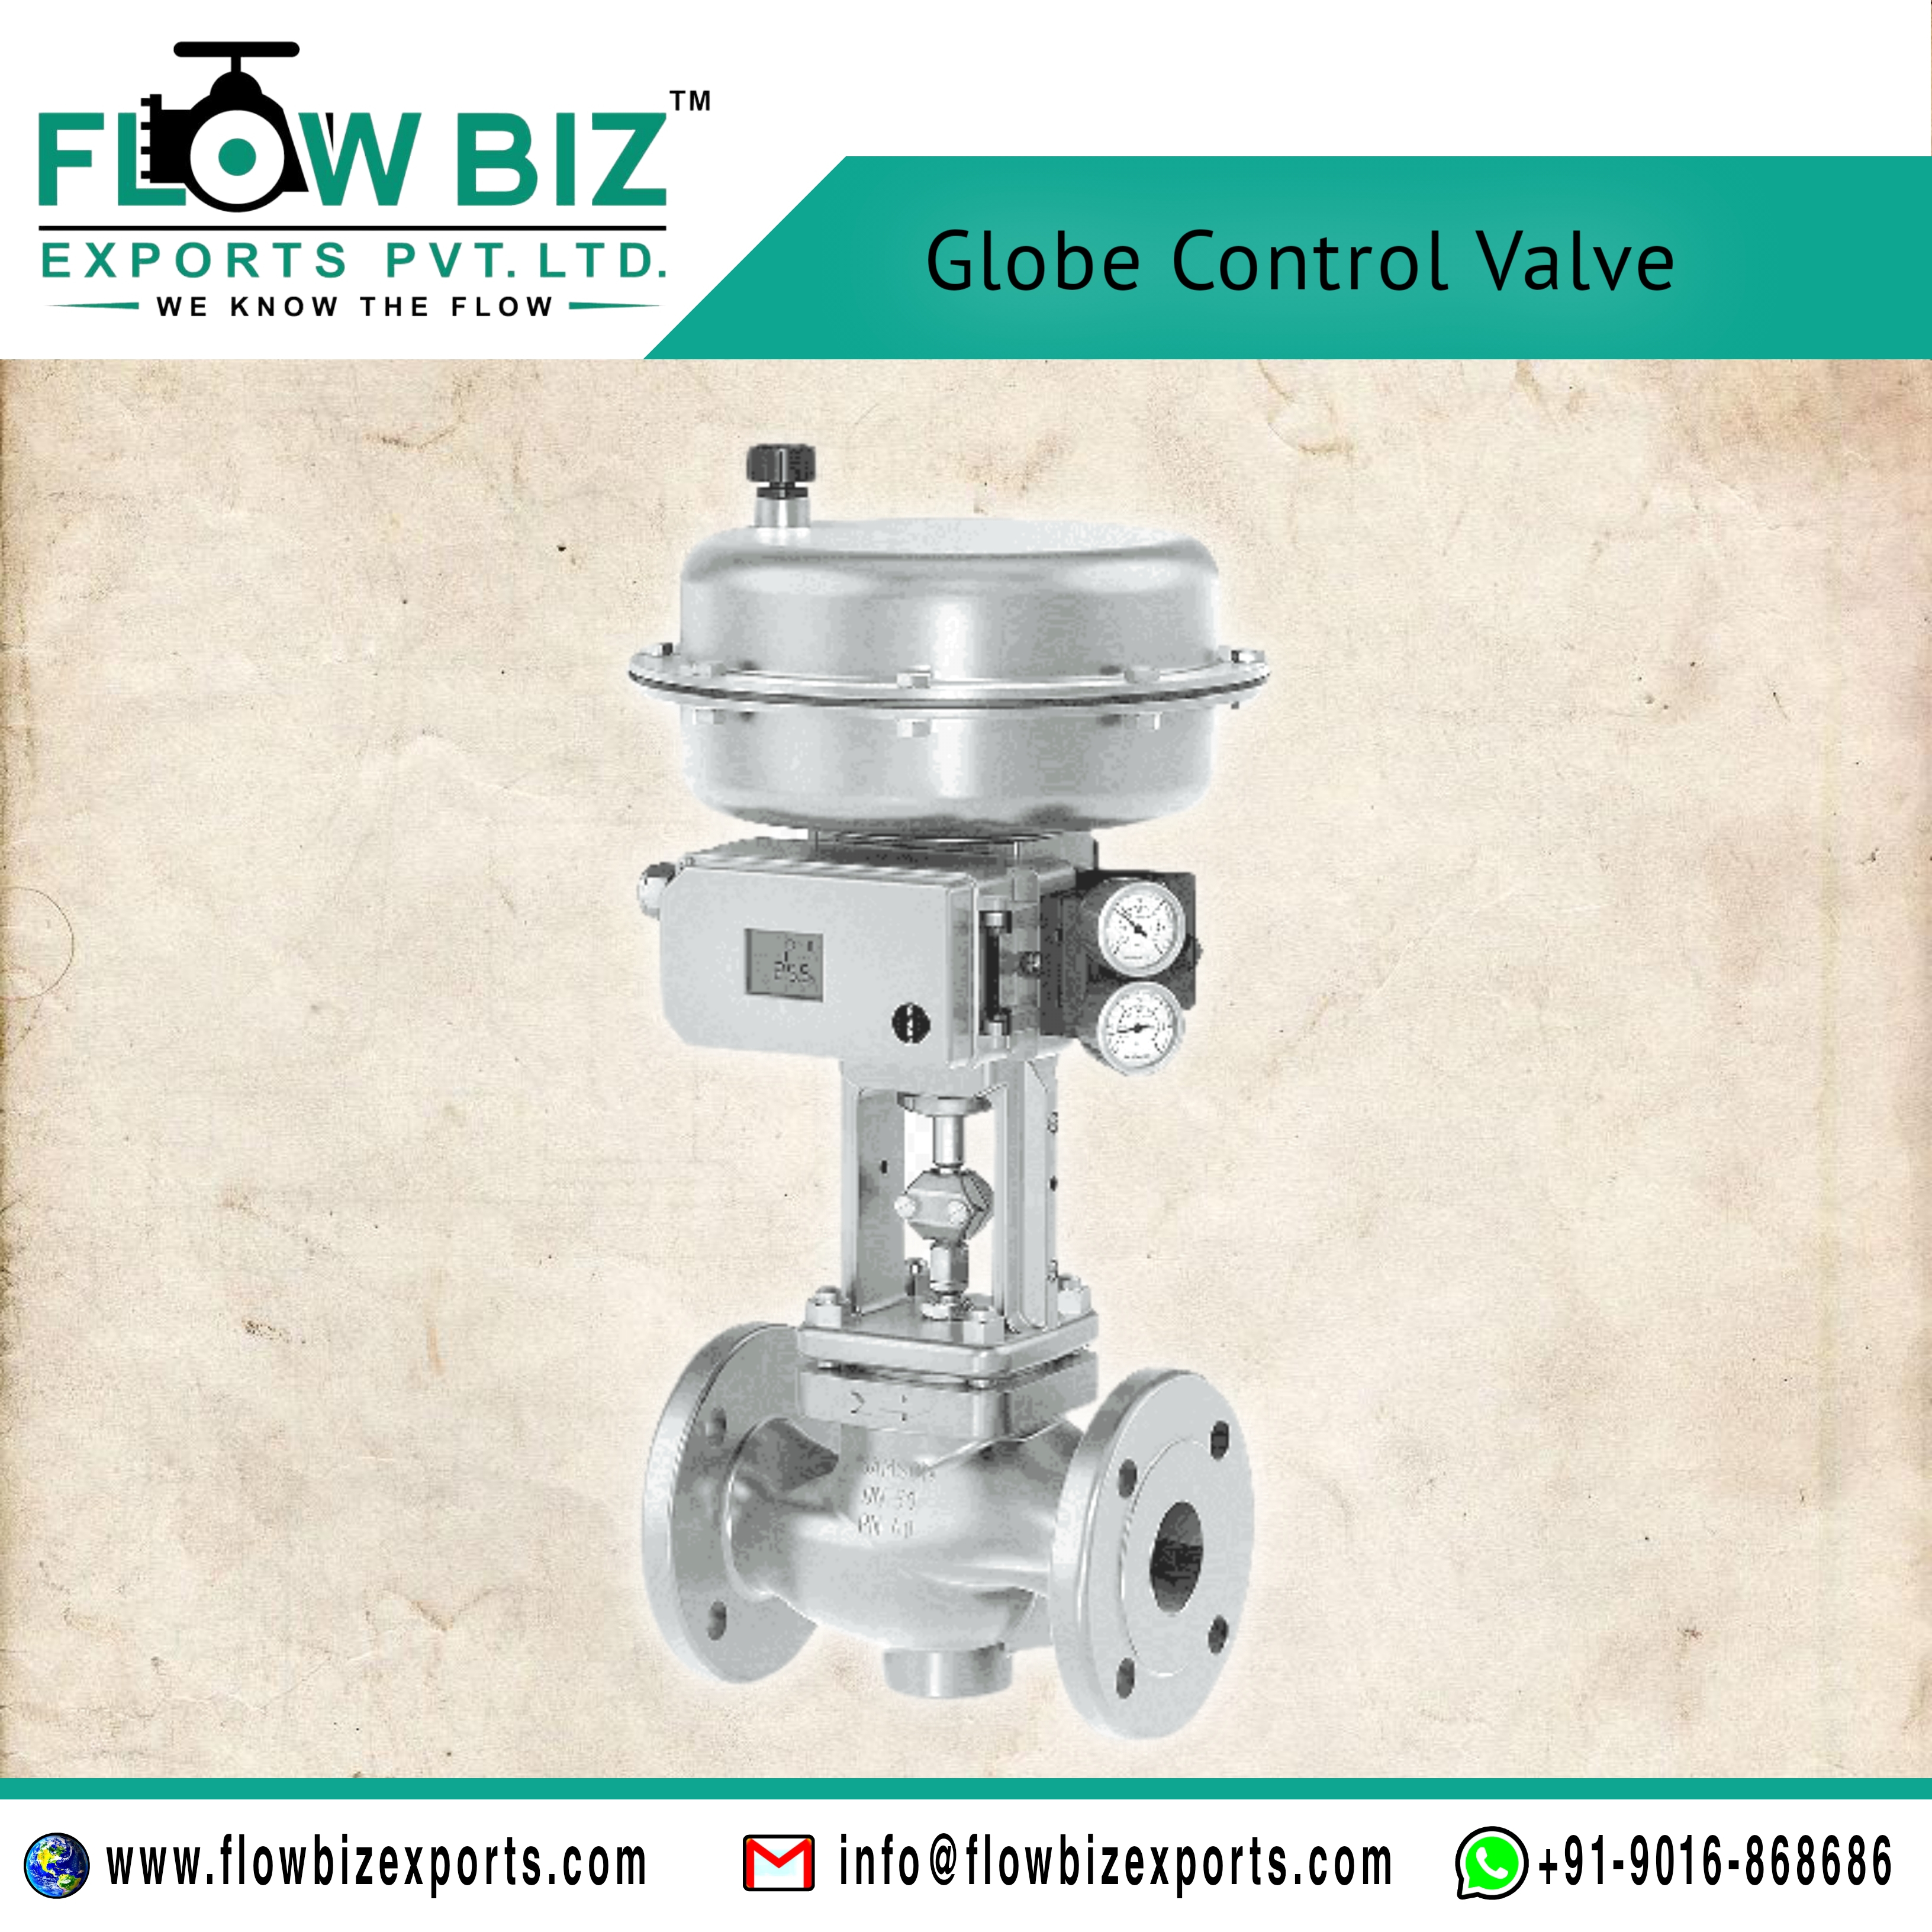 globe control valve manufacturer india - Flowbiz